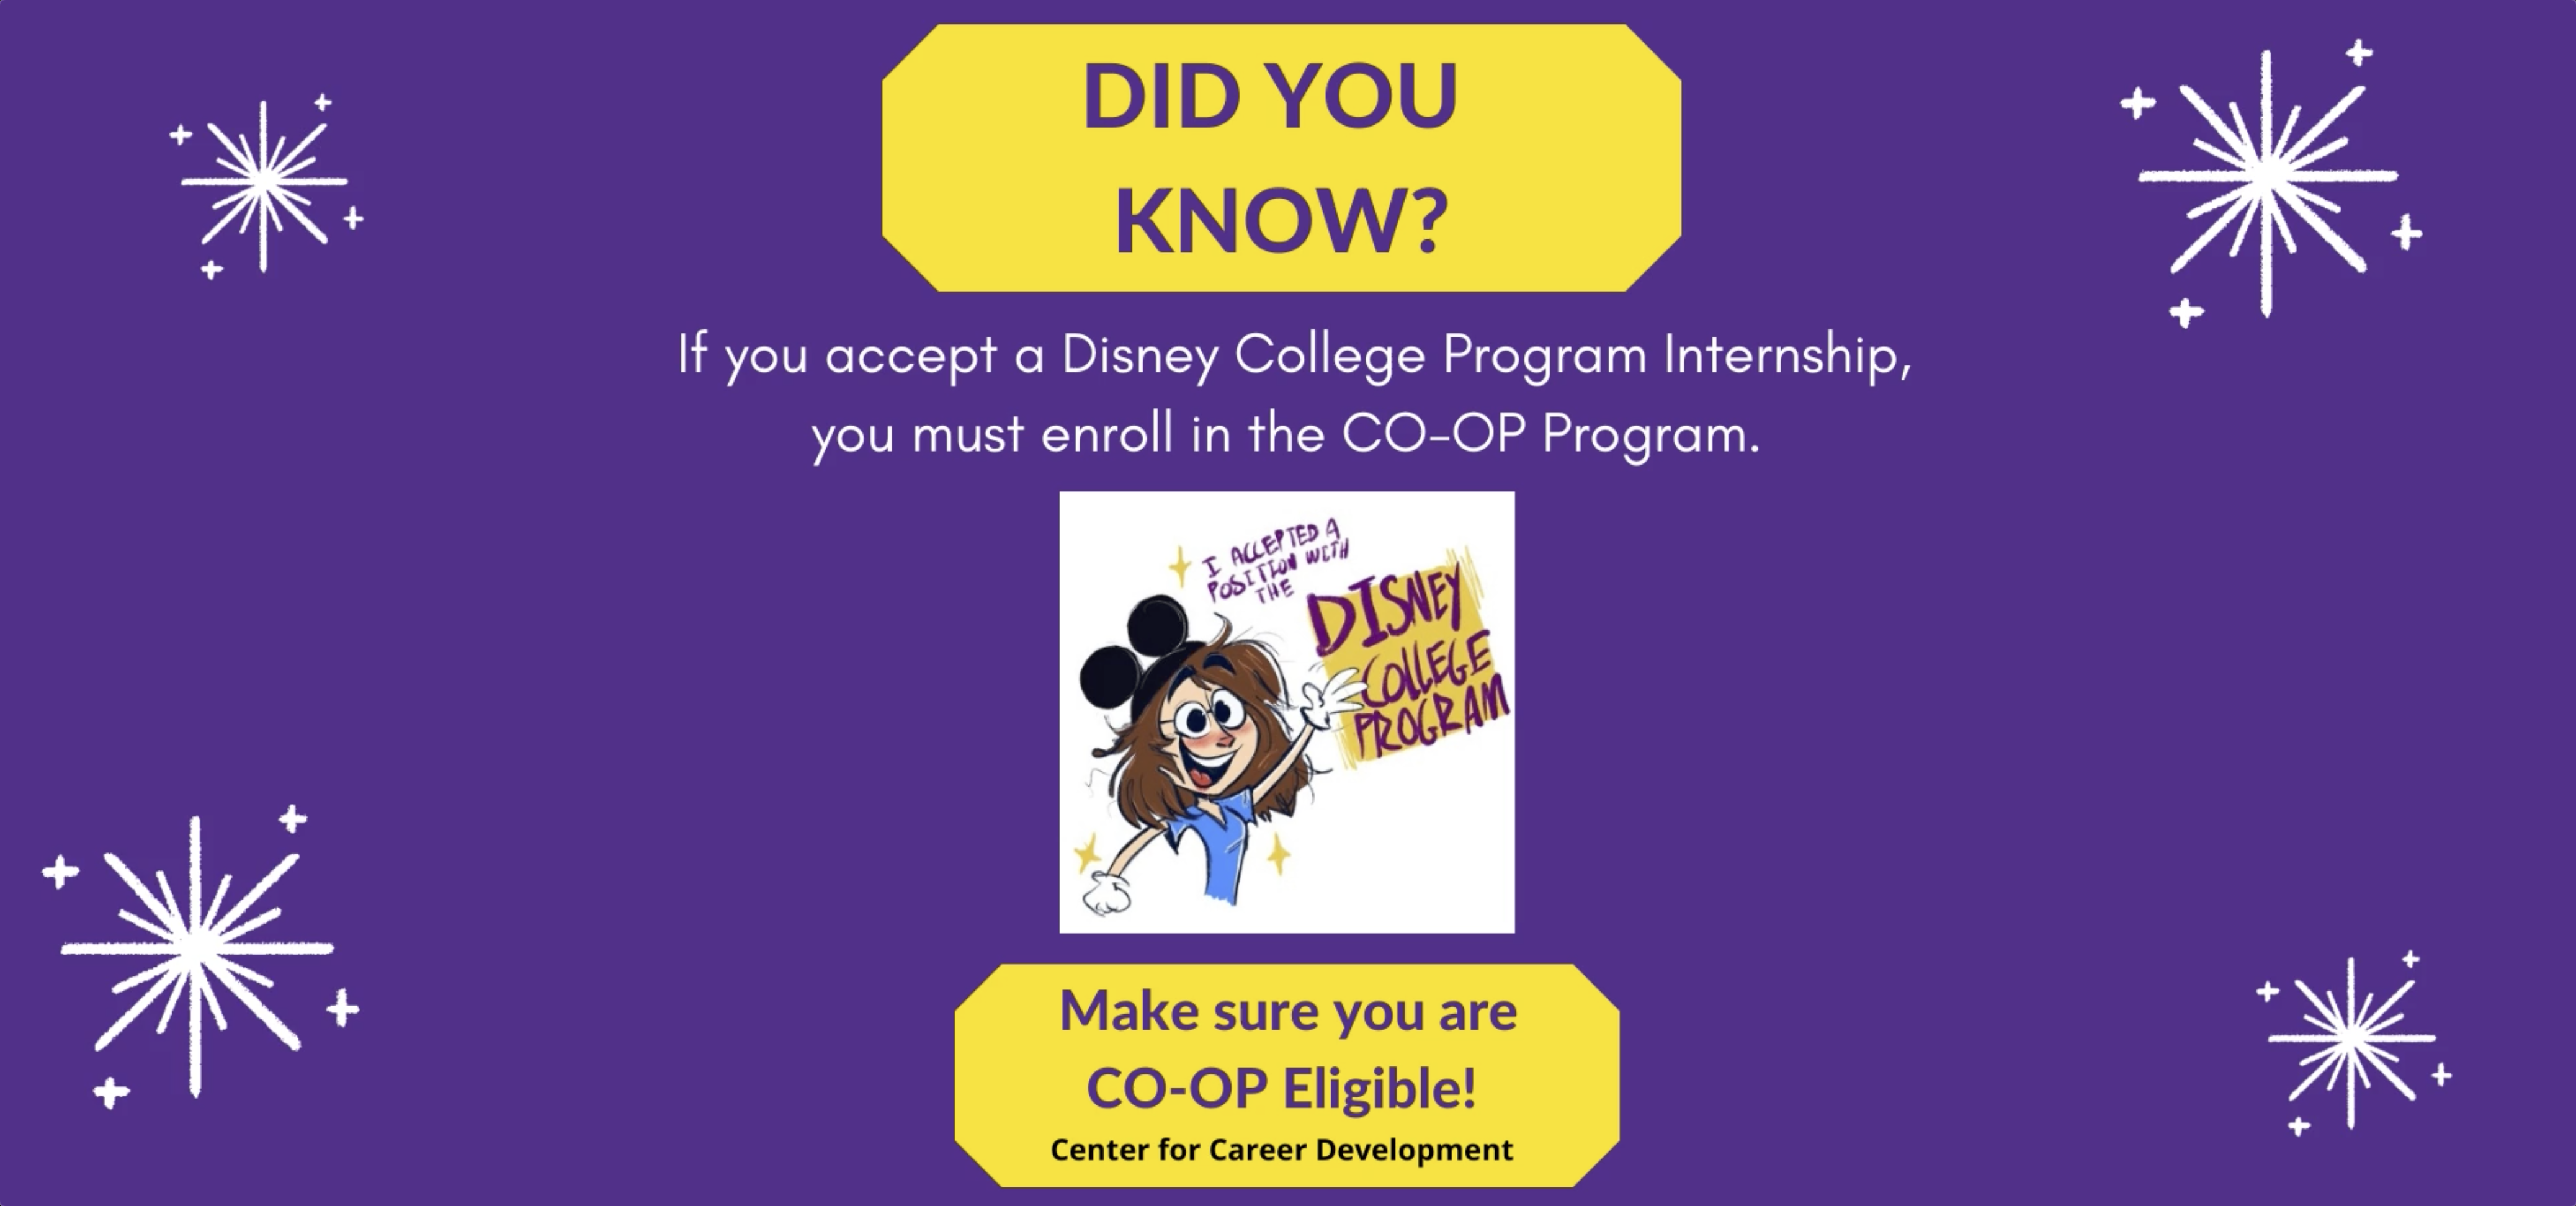 Disney College Program Internship